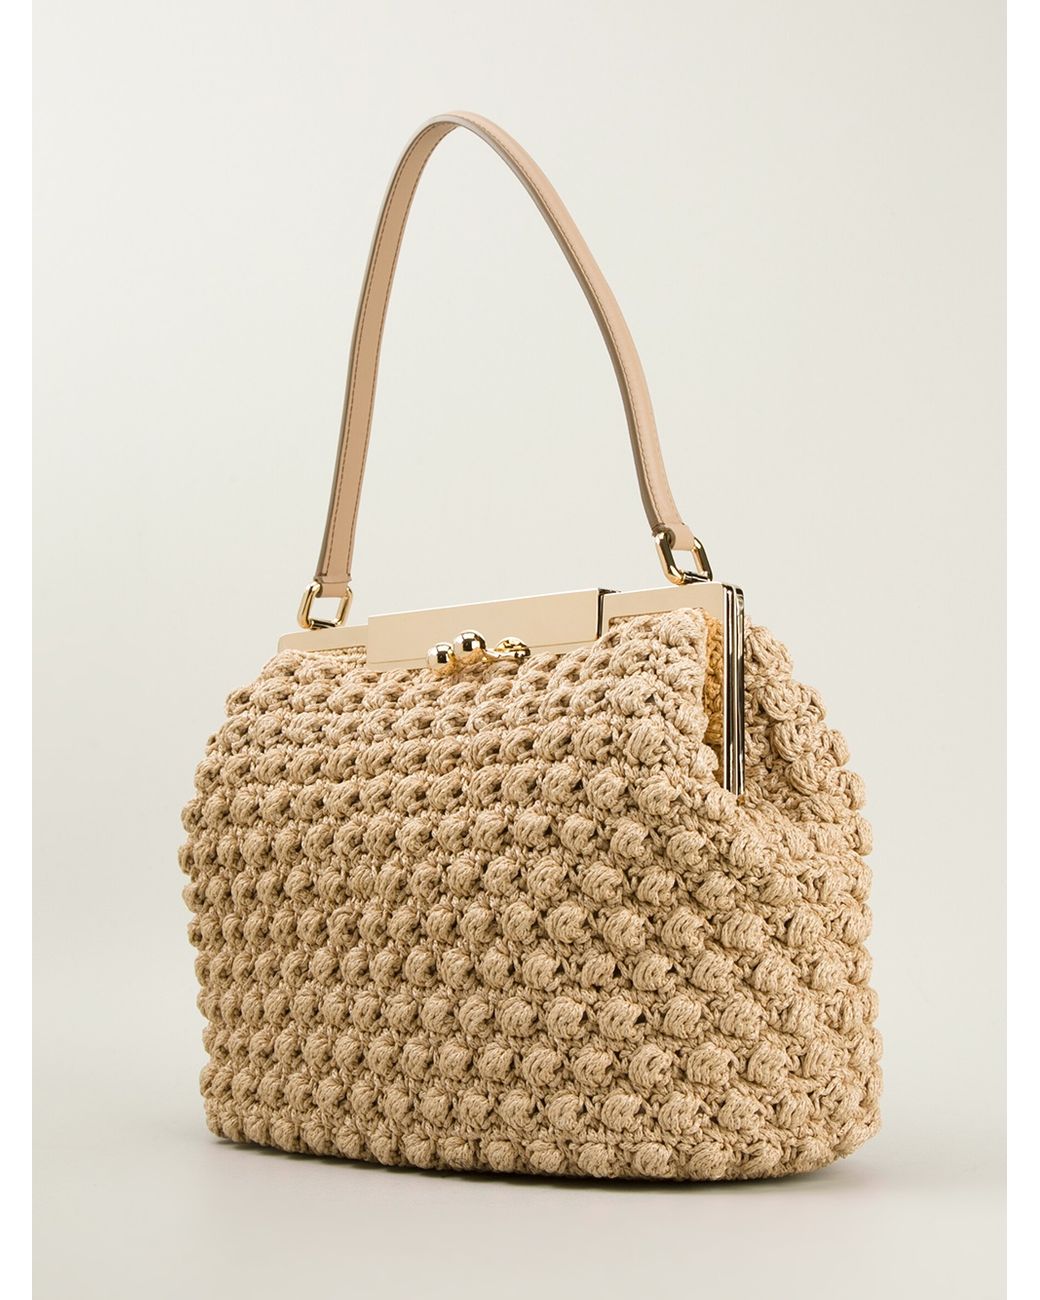 Dolce & Gabbana Medium Crochet Bag in Natural | Lyst